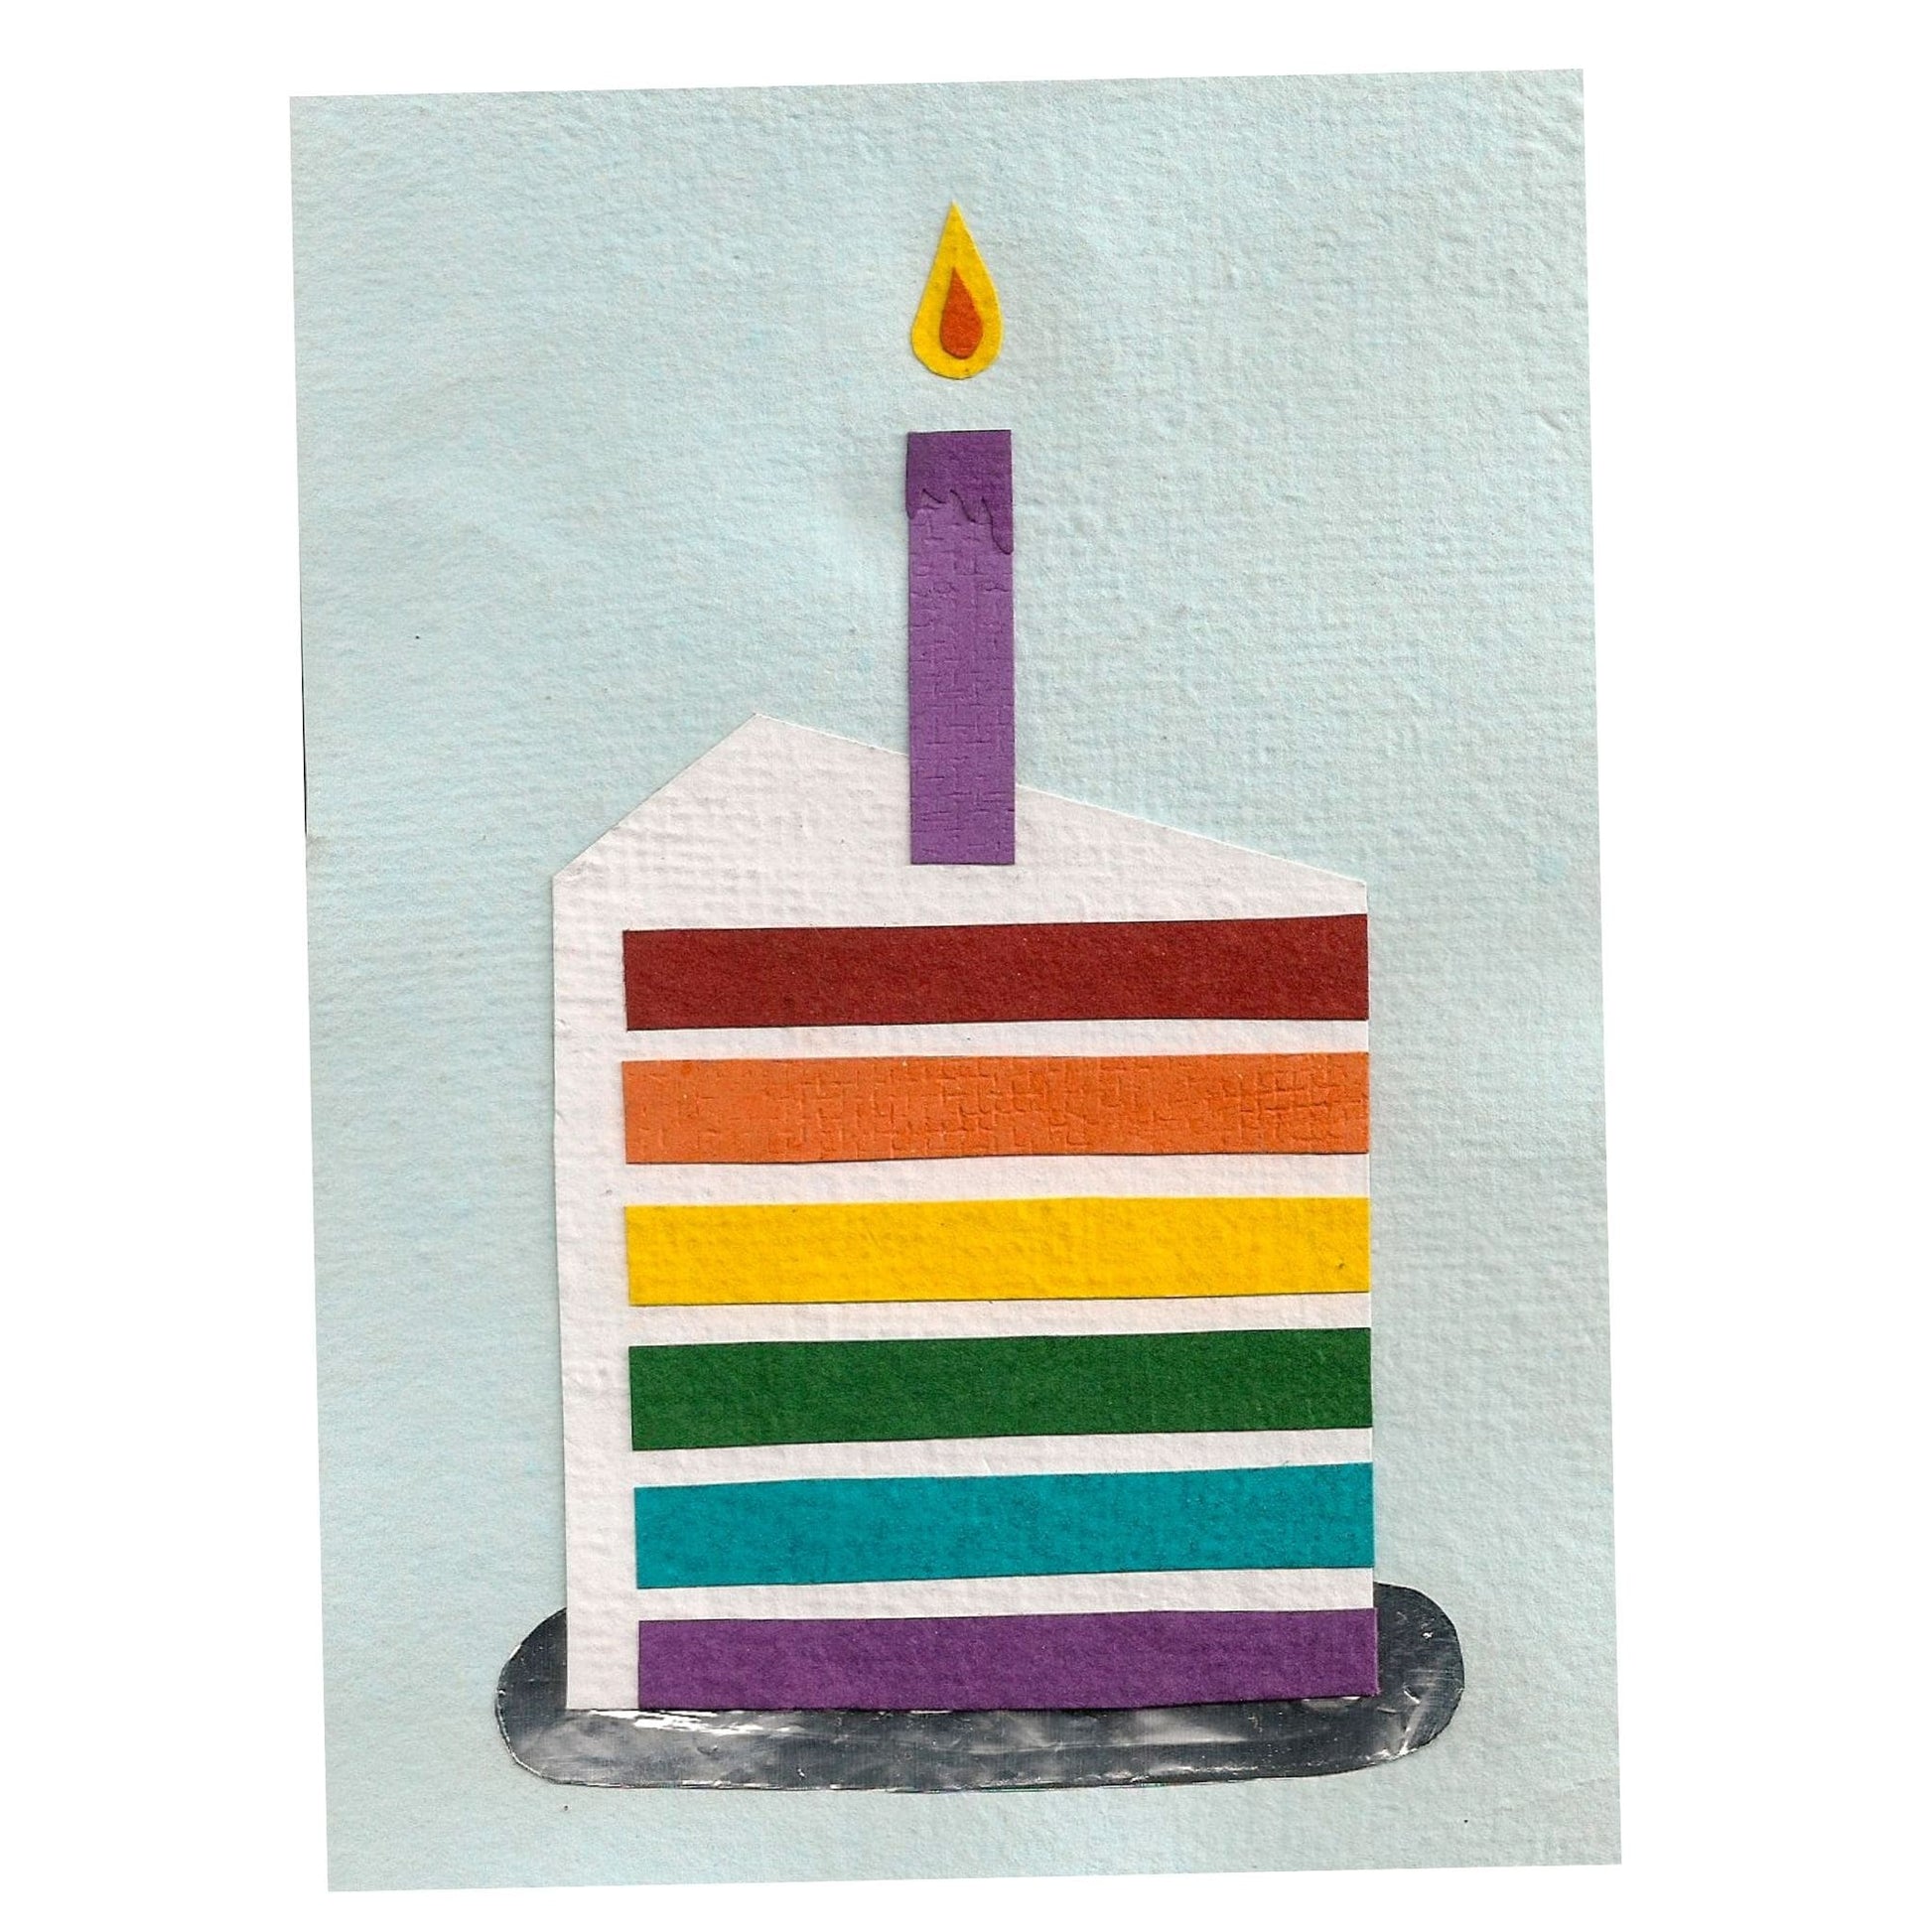 Rainbow Cake - Handmade Birthday Card from Recycled Materials